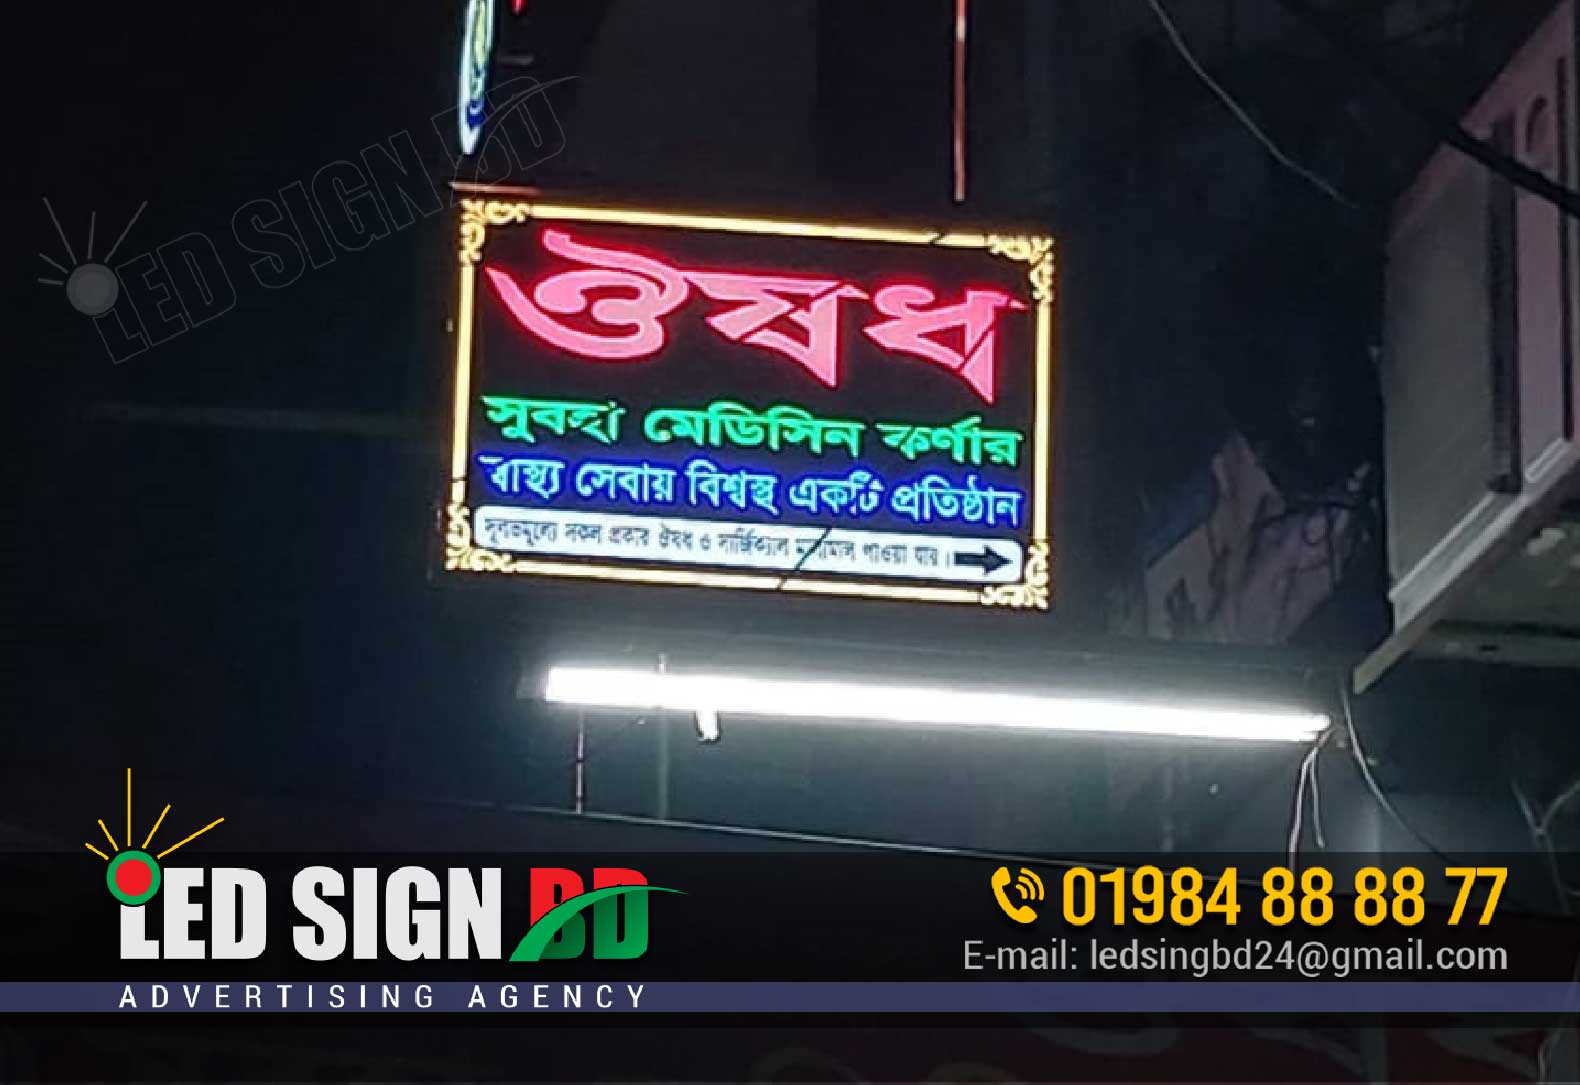 SS BACKLIT SIGNAGE BD, TOP 10 LED SIGNS COMPANY IN DHAKA, Acrylic Letter with sitelit signage in Dhaka Bangladesh. BANGLADESH, Pana Lighting Signboard Signage in Dhaka Bangladesh, Best Led Signage Company in Dhaka Bangladesh.